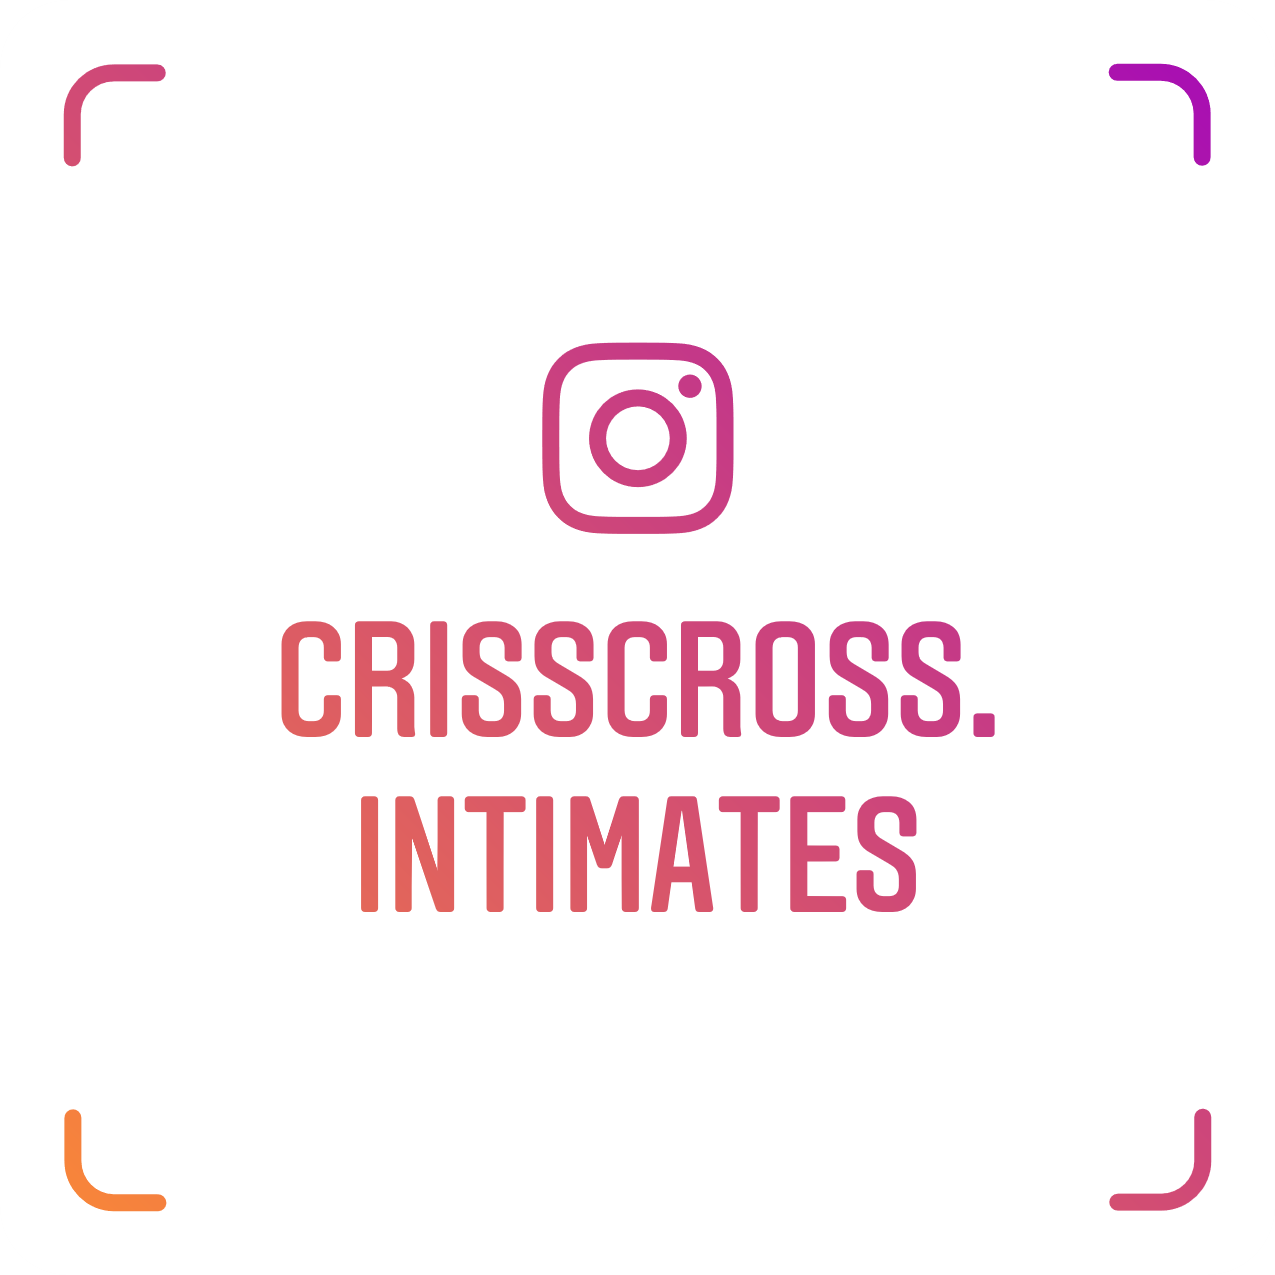 CRISSCROSSIntimates on Instagram